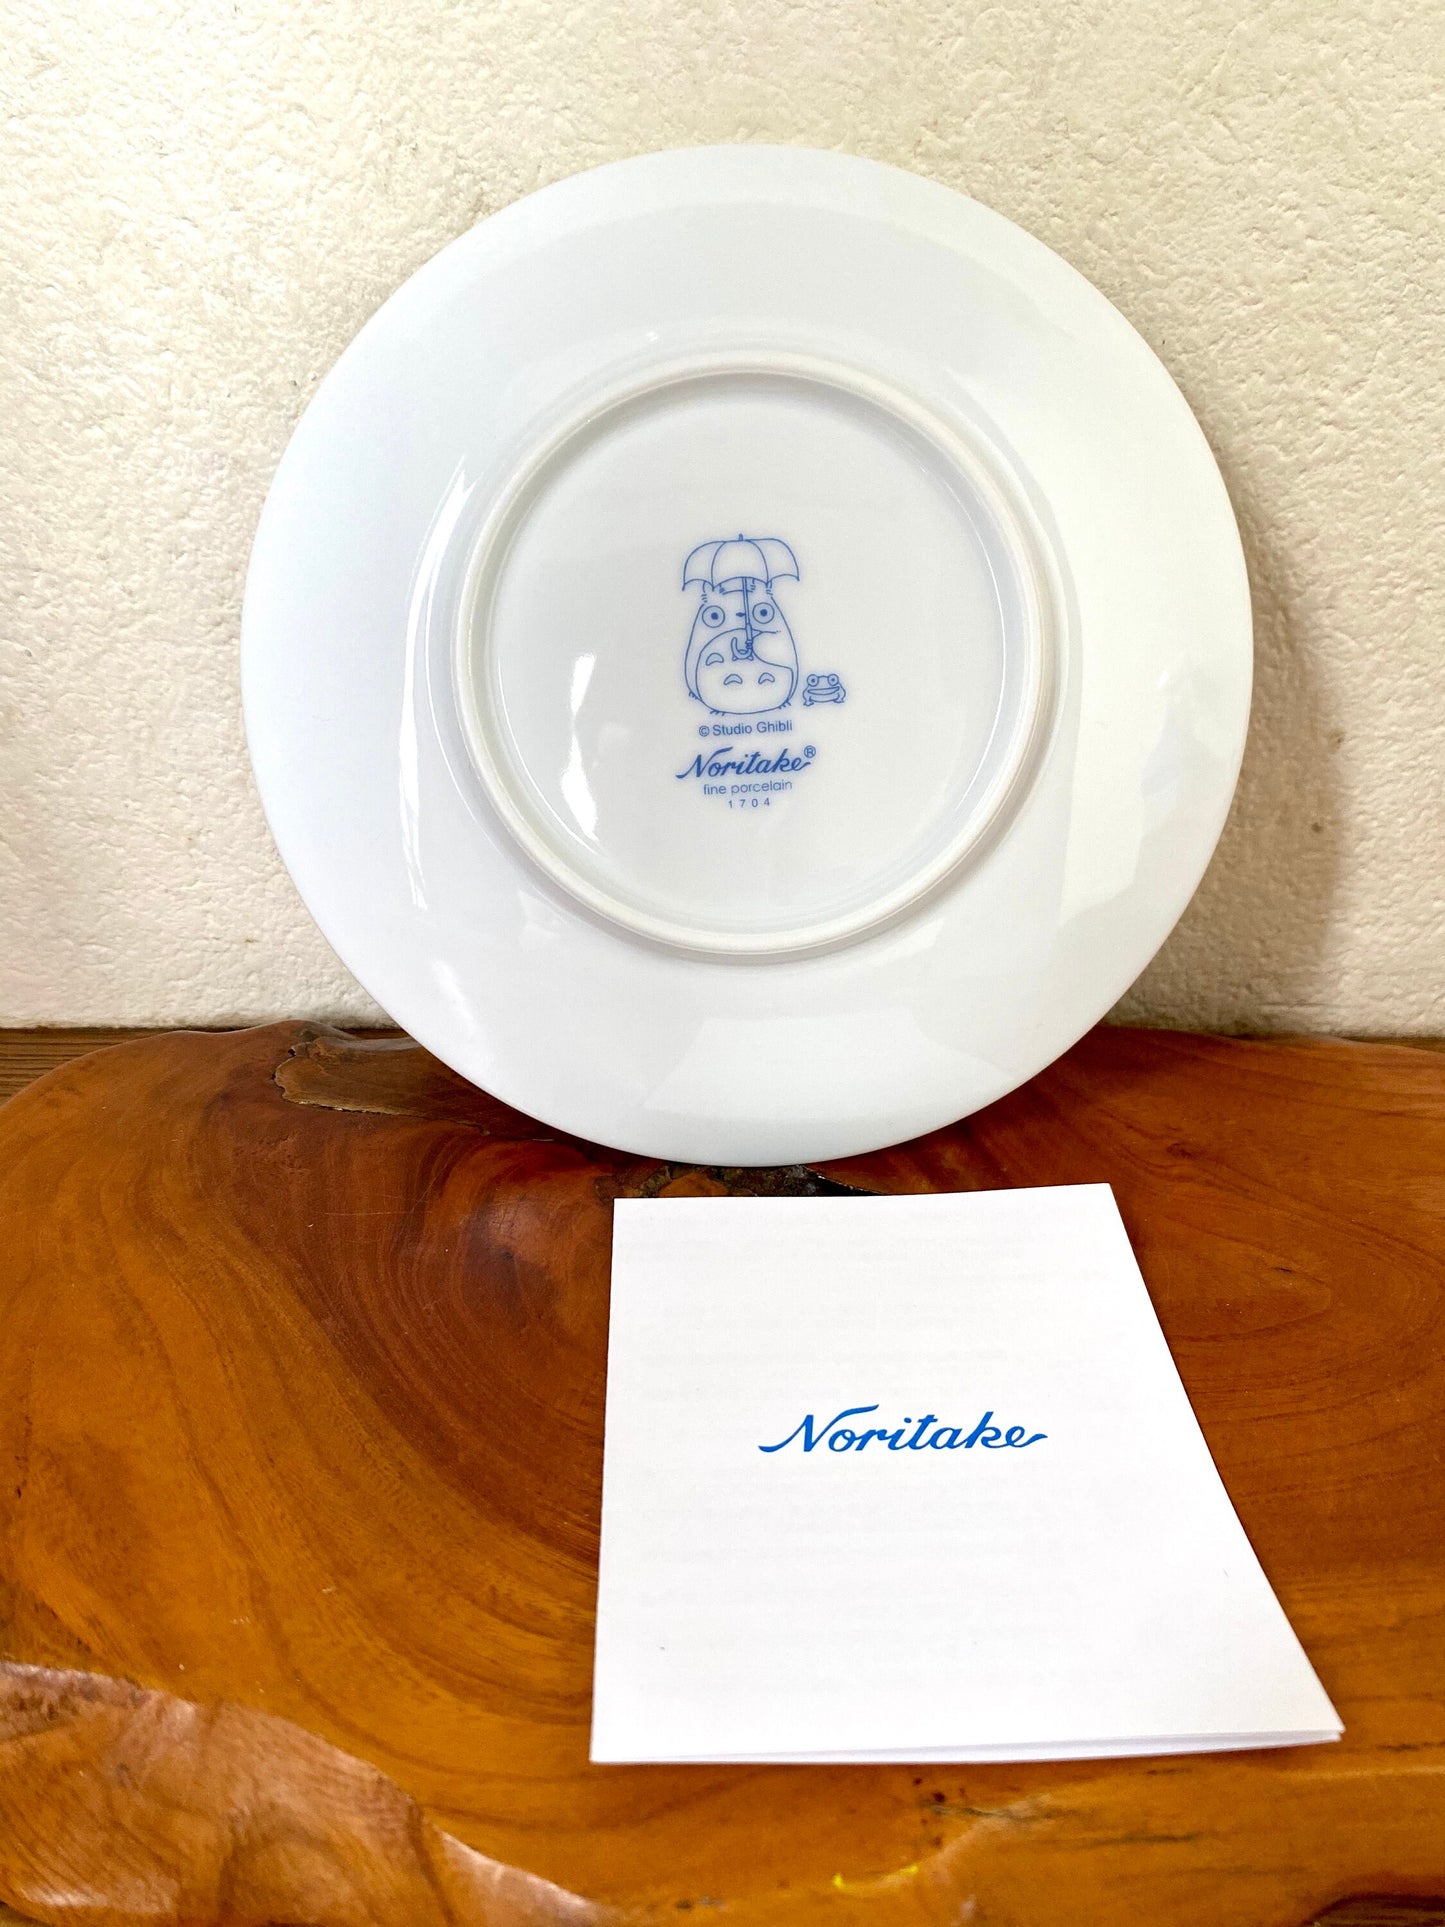 My Neighbor Totoro plate, collectible by Noritake - 15.5cm/6.1" diameter with original box